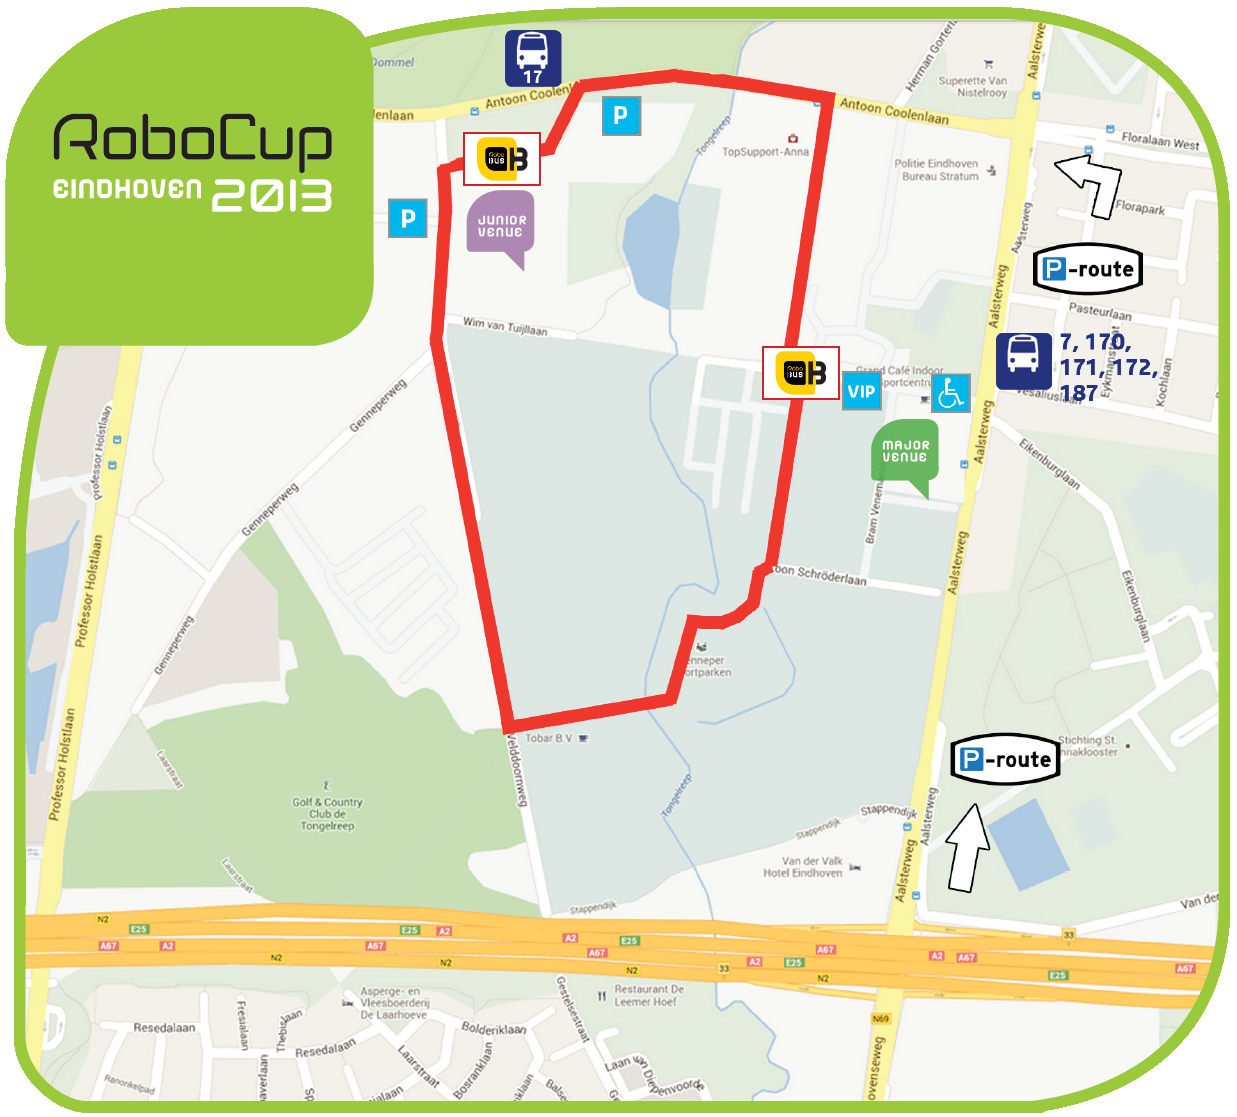 RoboCup 2013 - Parking map